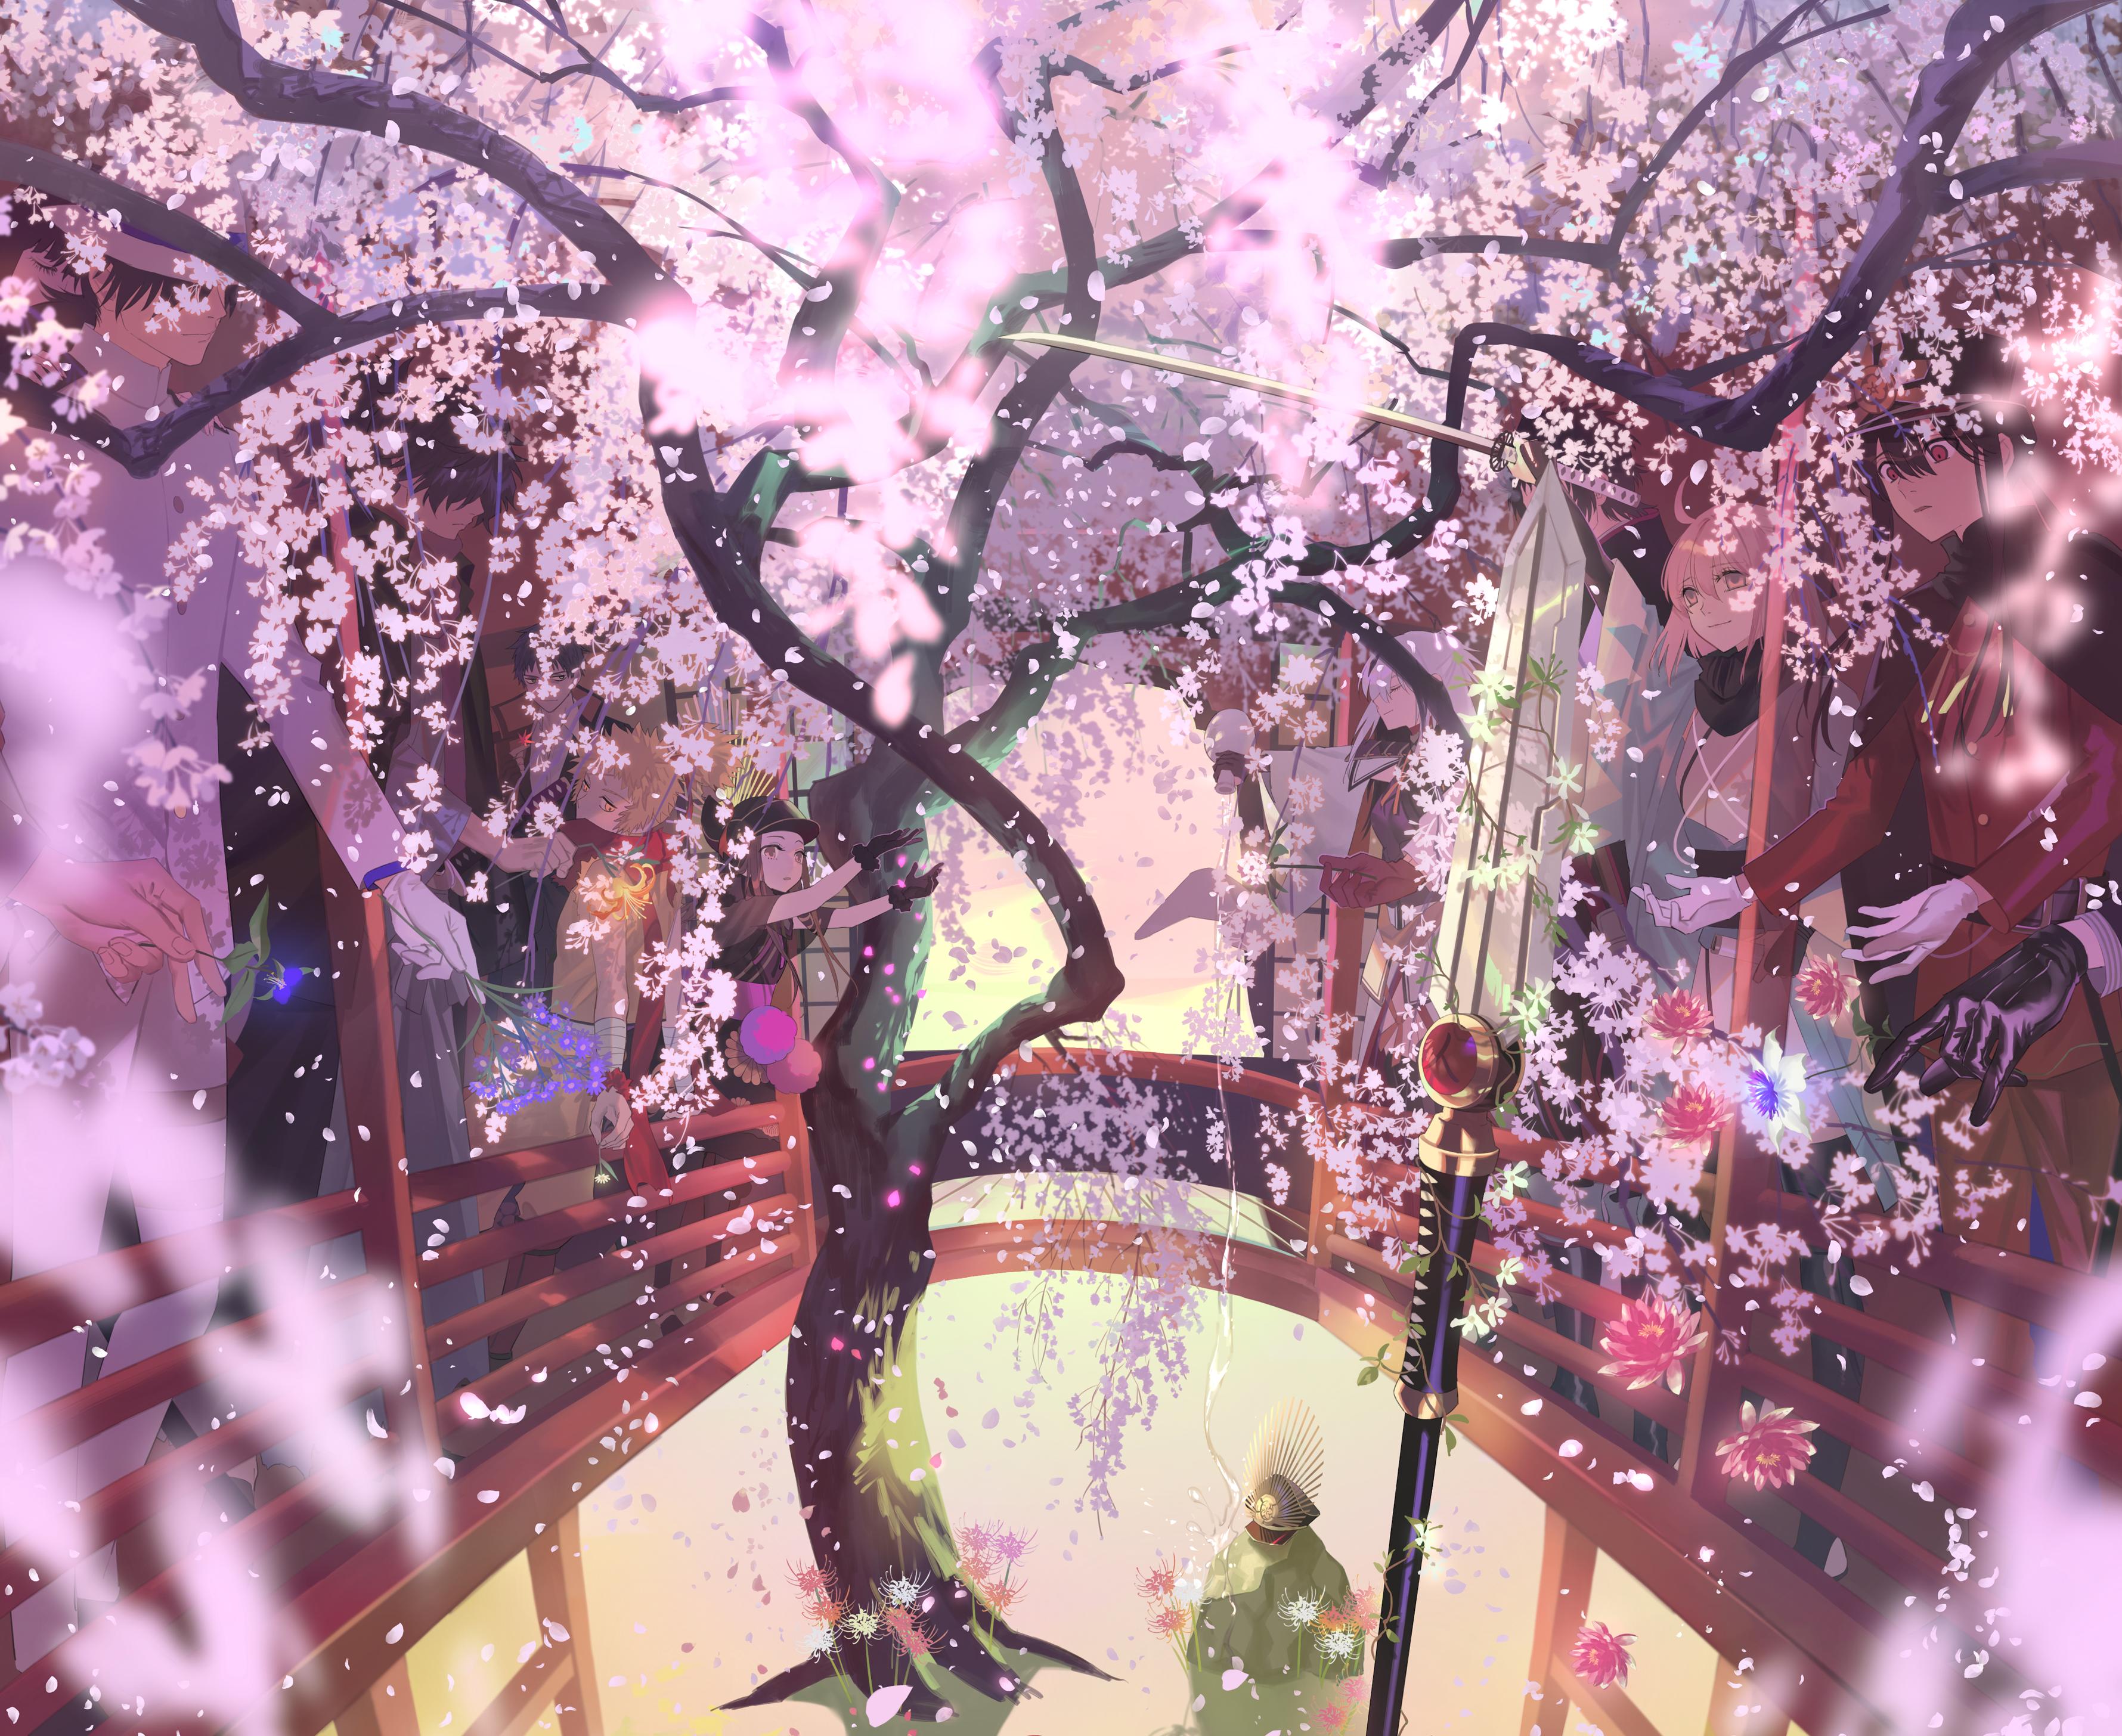 HD wallpaper, Fate Series, Warabi Tama, Artwork, Anime Girls, Cherry Blossom, Digital Art, Anime